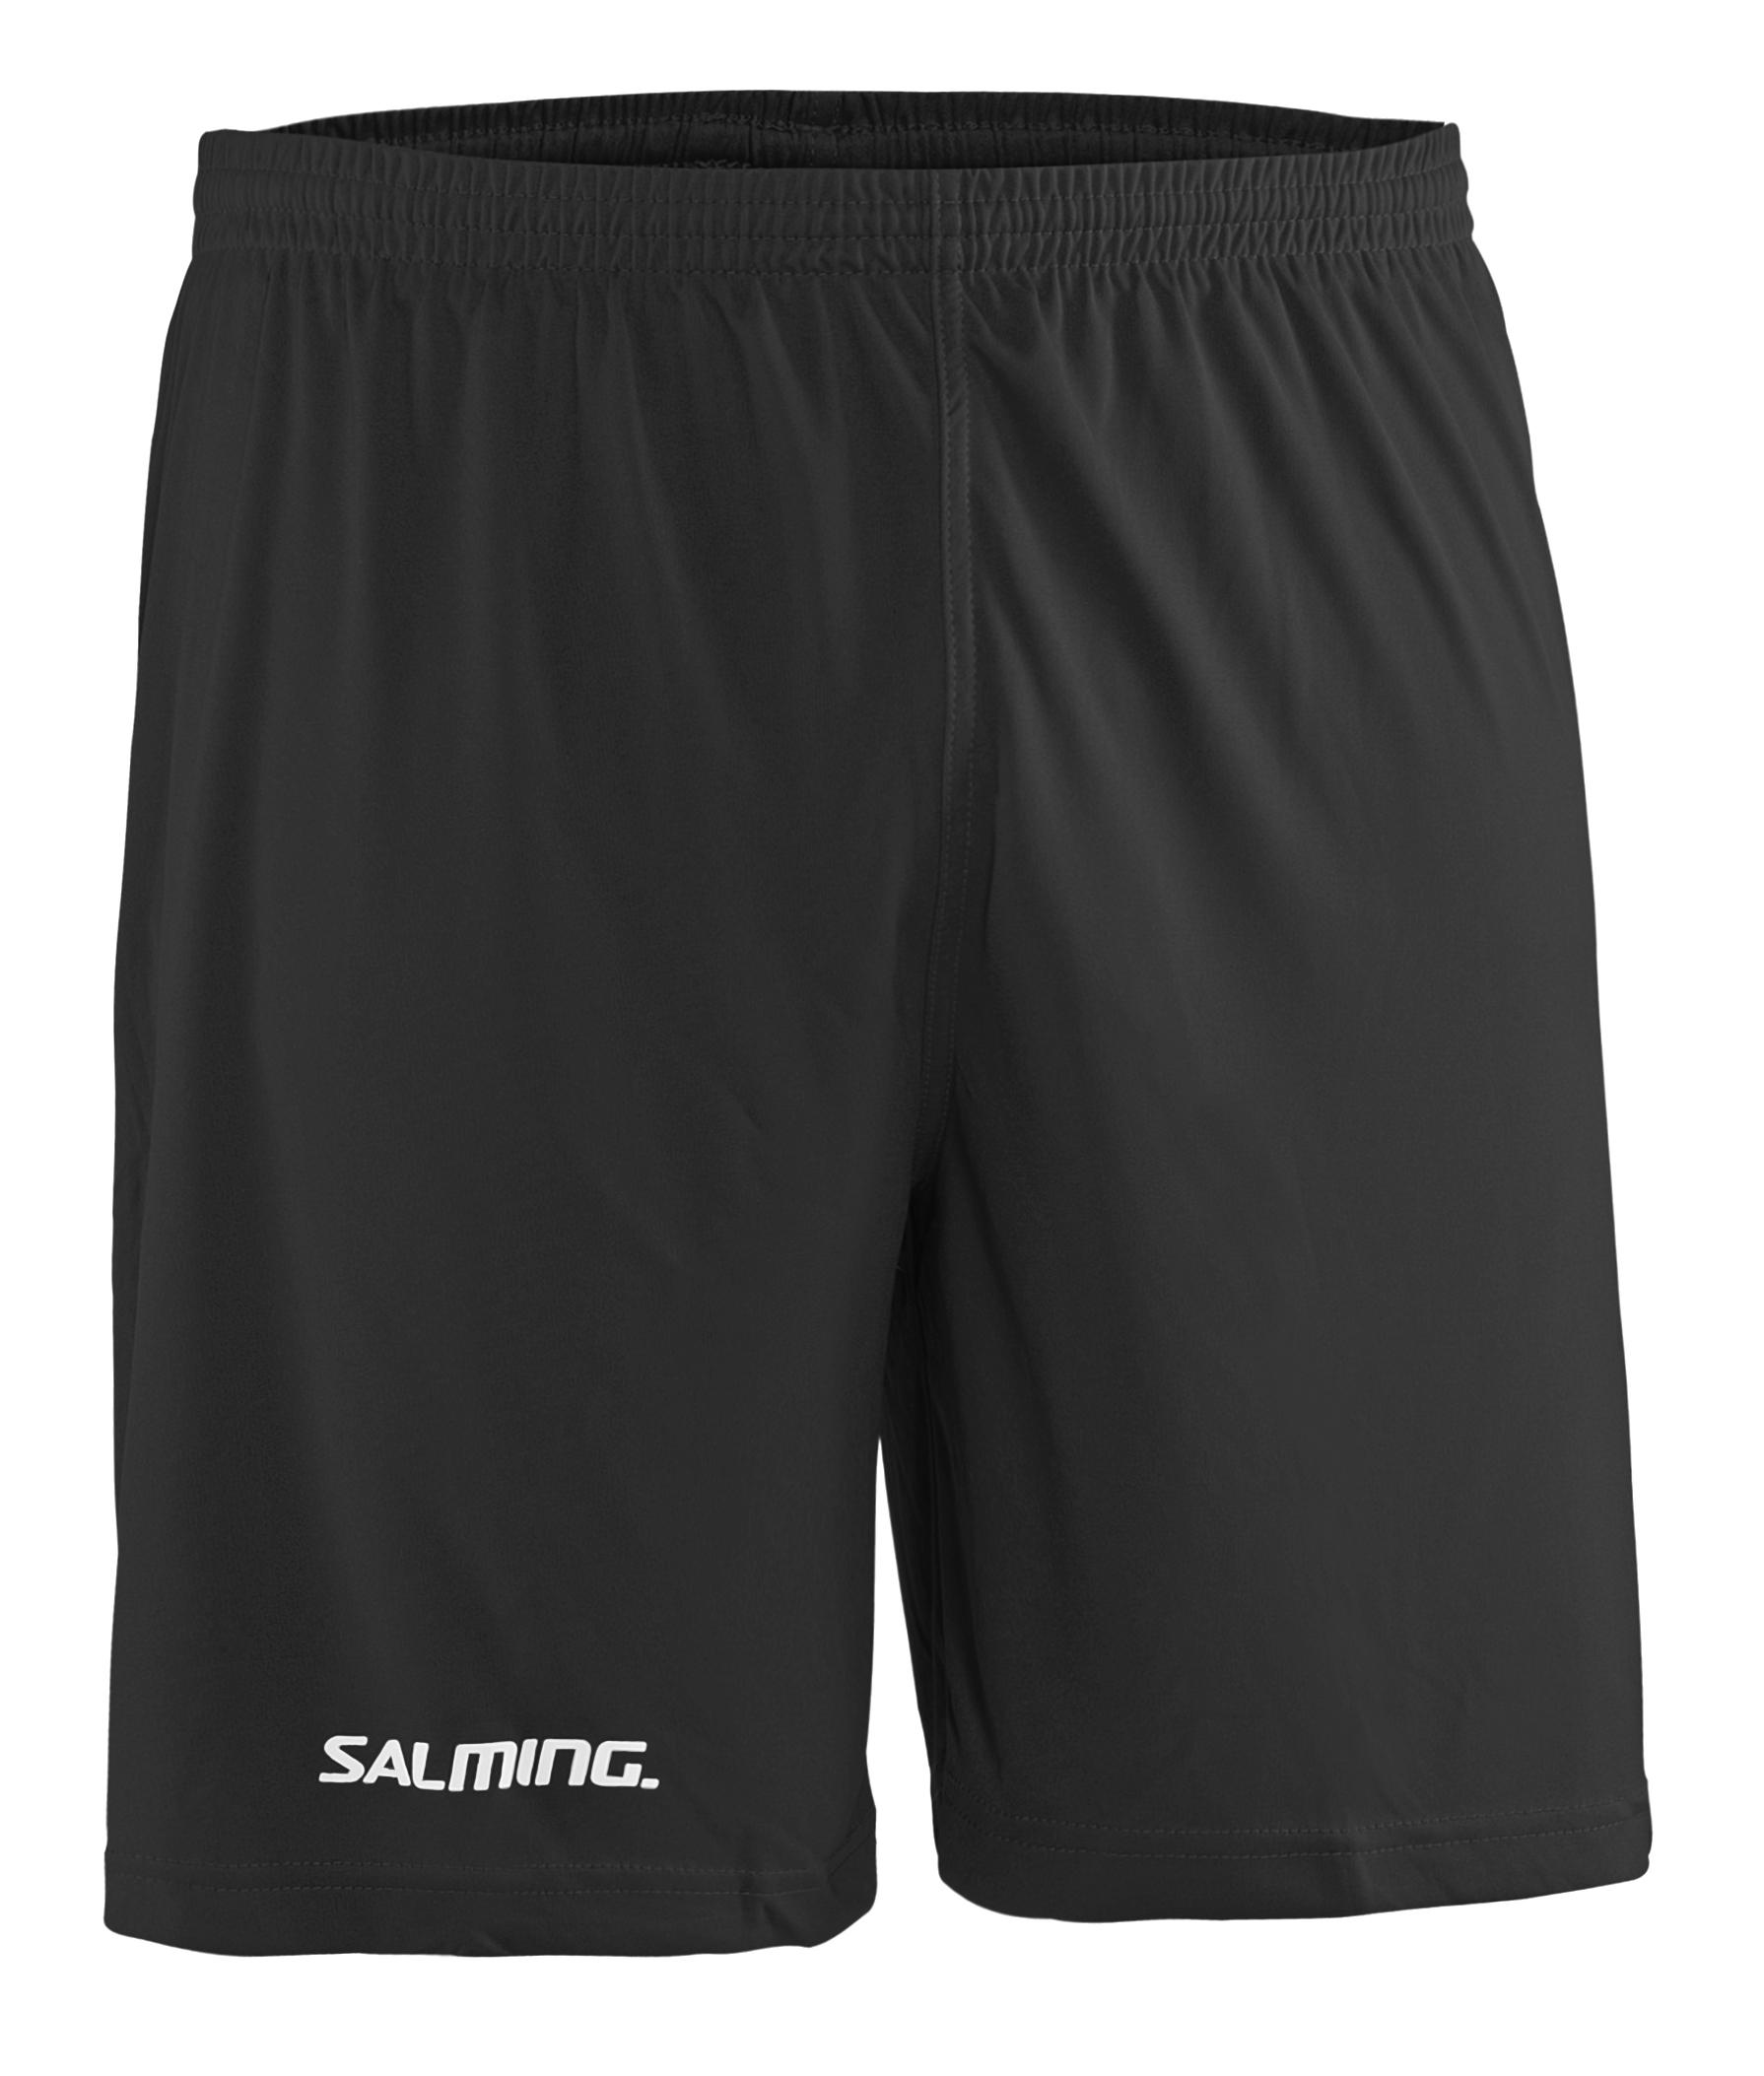 Salming Core Shorts SR Black